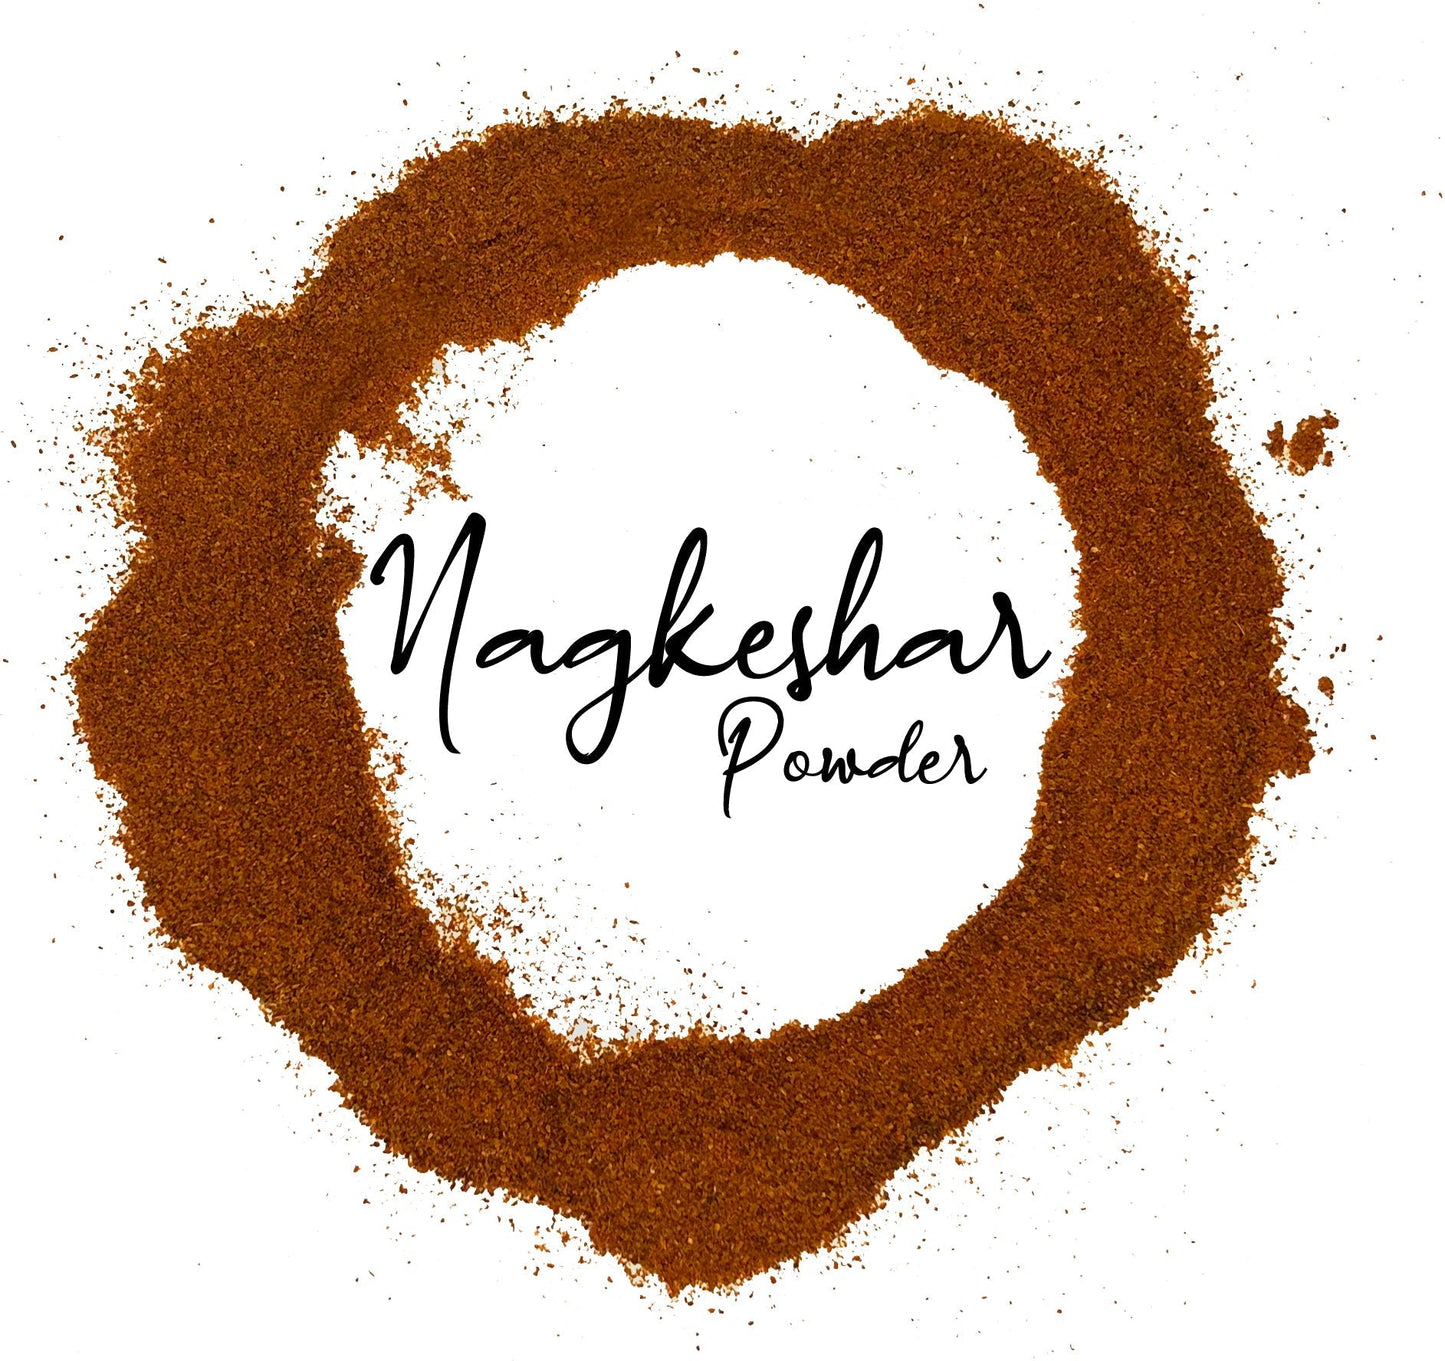 Wholesale Spices & Herbs - Nagkeshar Powder, Organic 1lb (454g) Bag